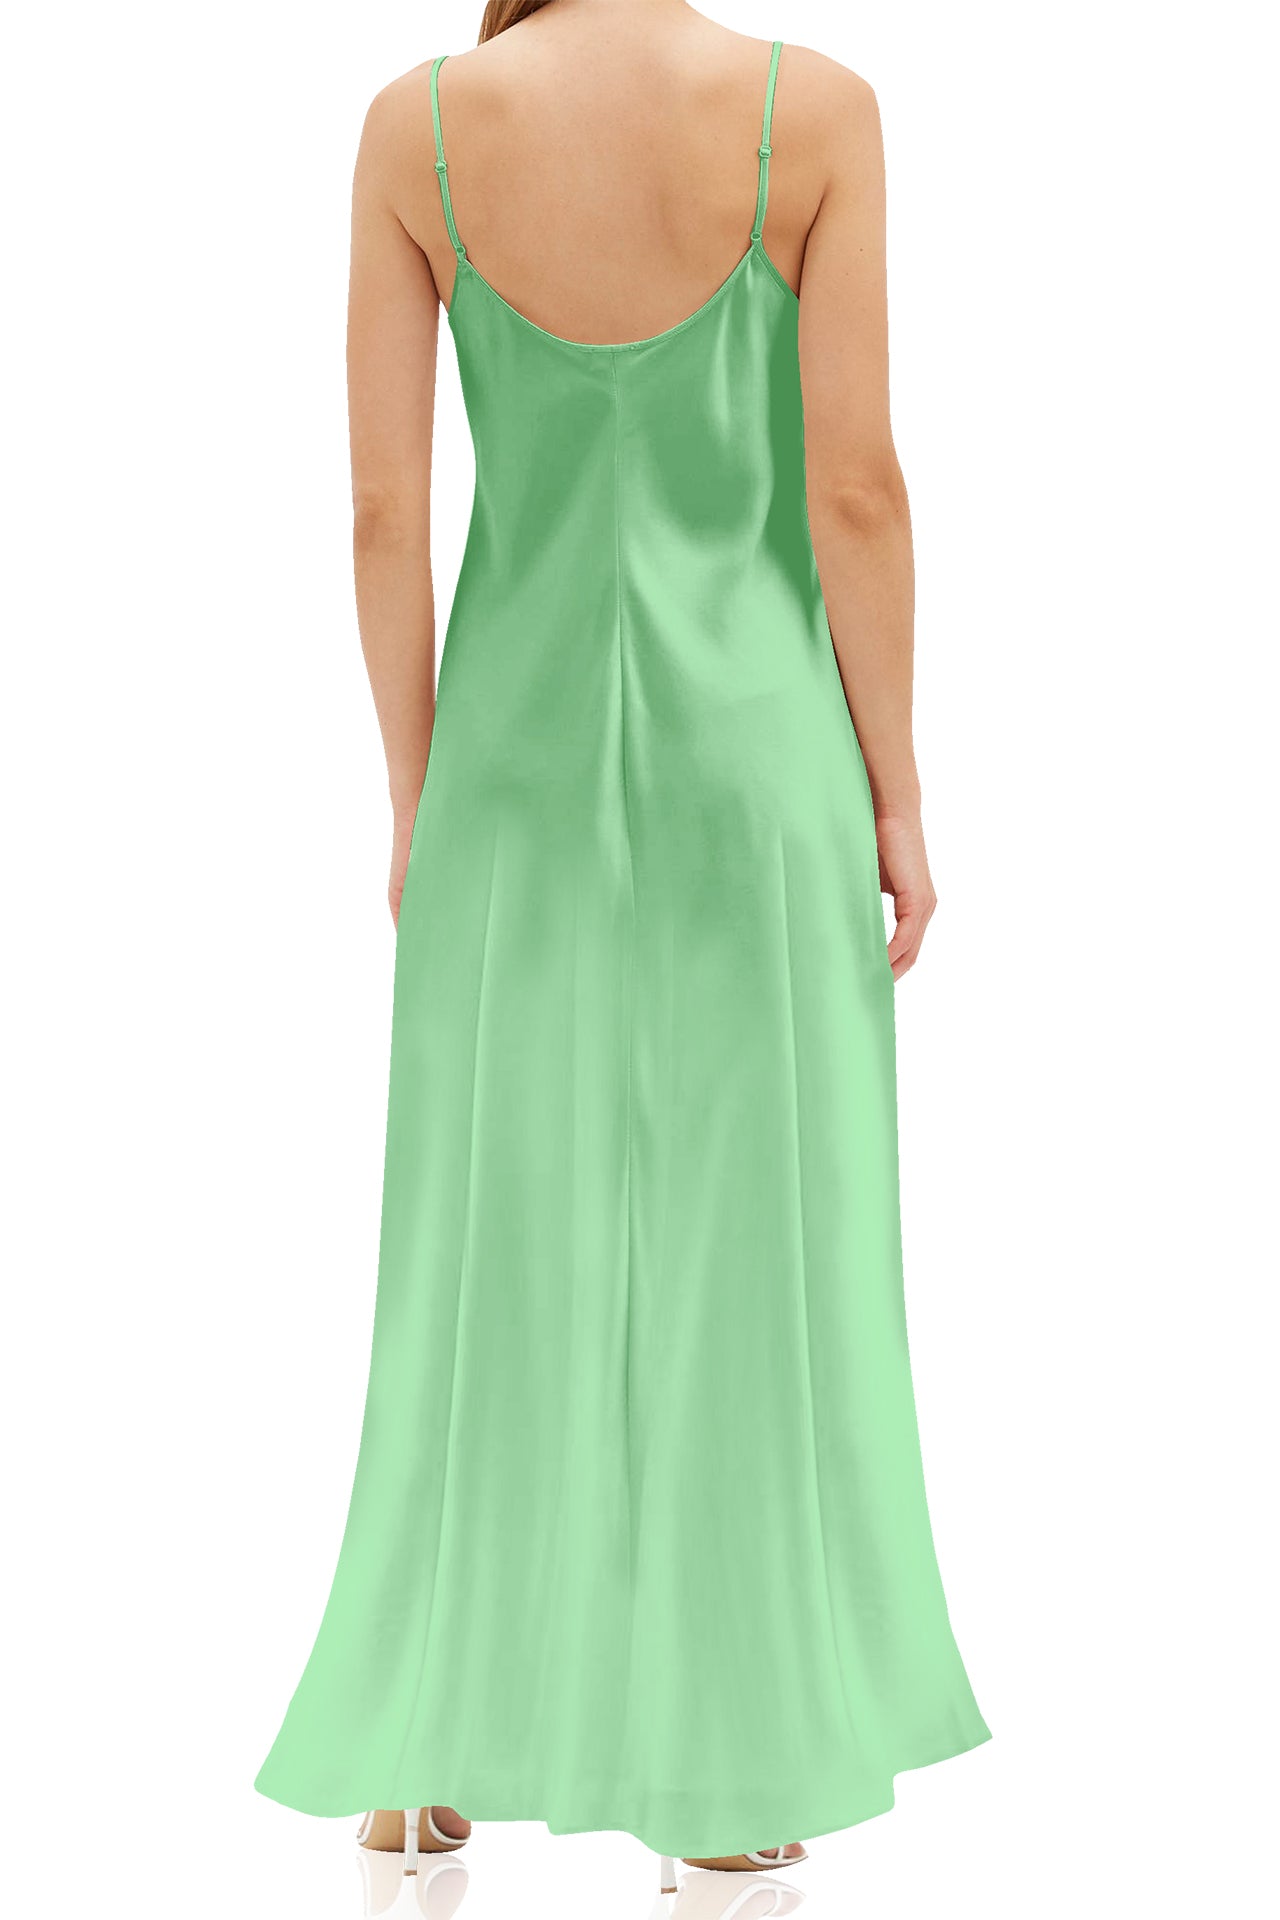 "long silk slip dress" "green silk slip dress" "maxi dress with slip" "Kyle X Shahida"